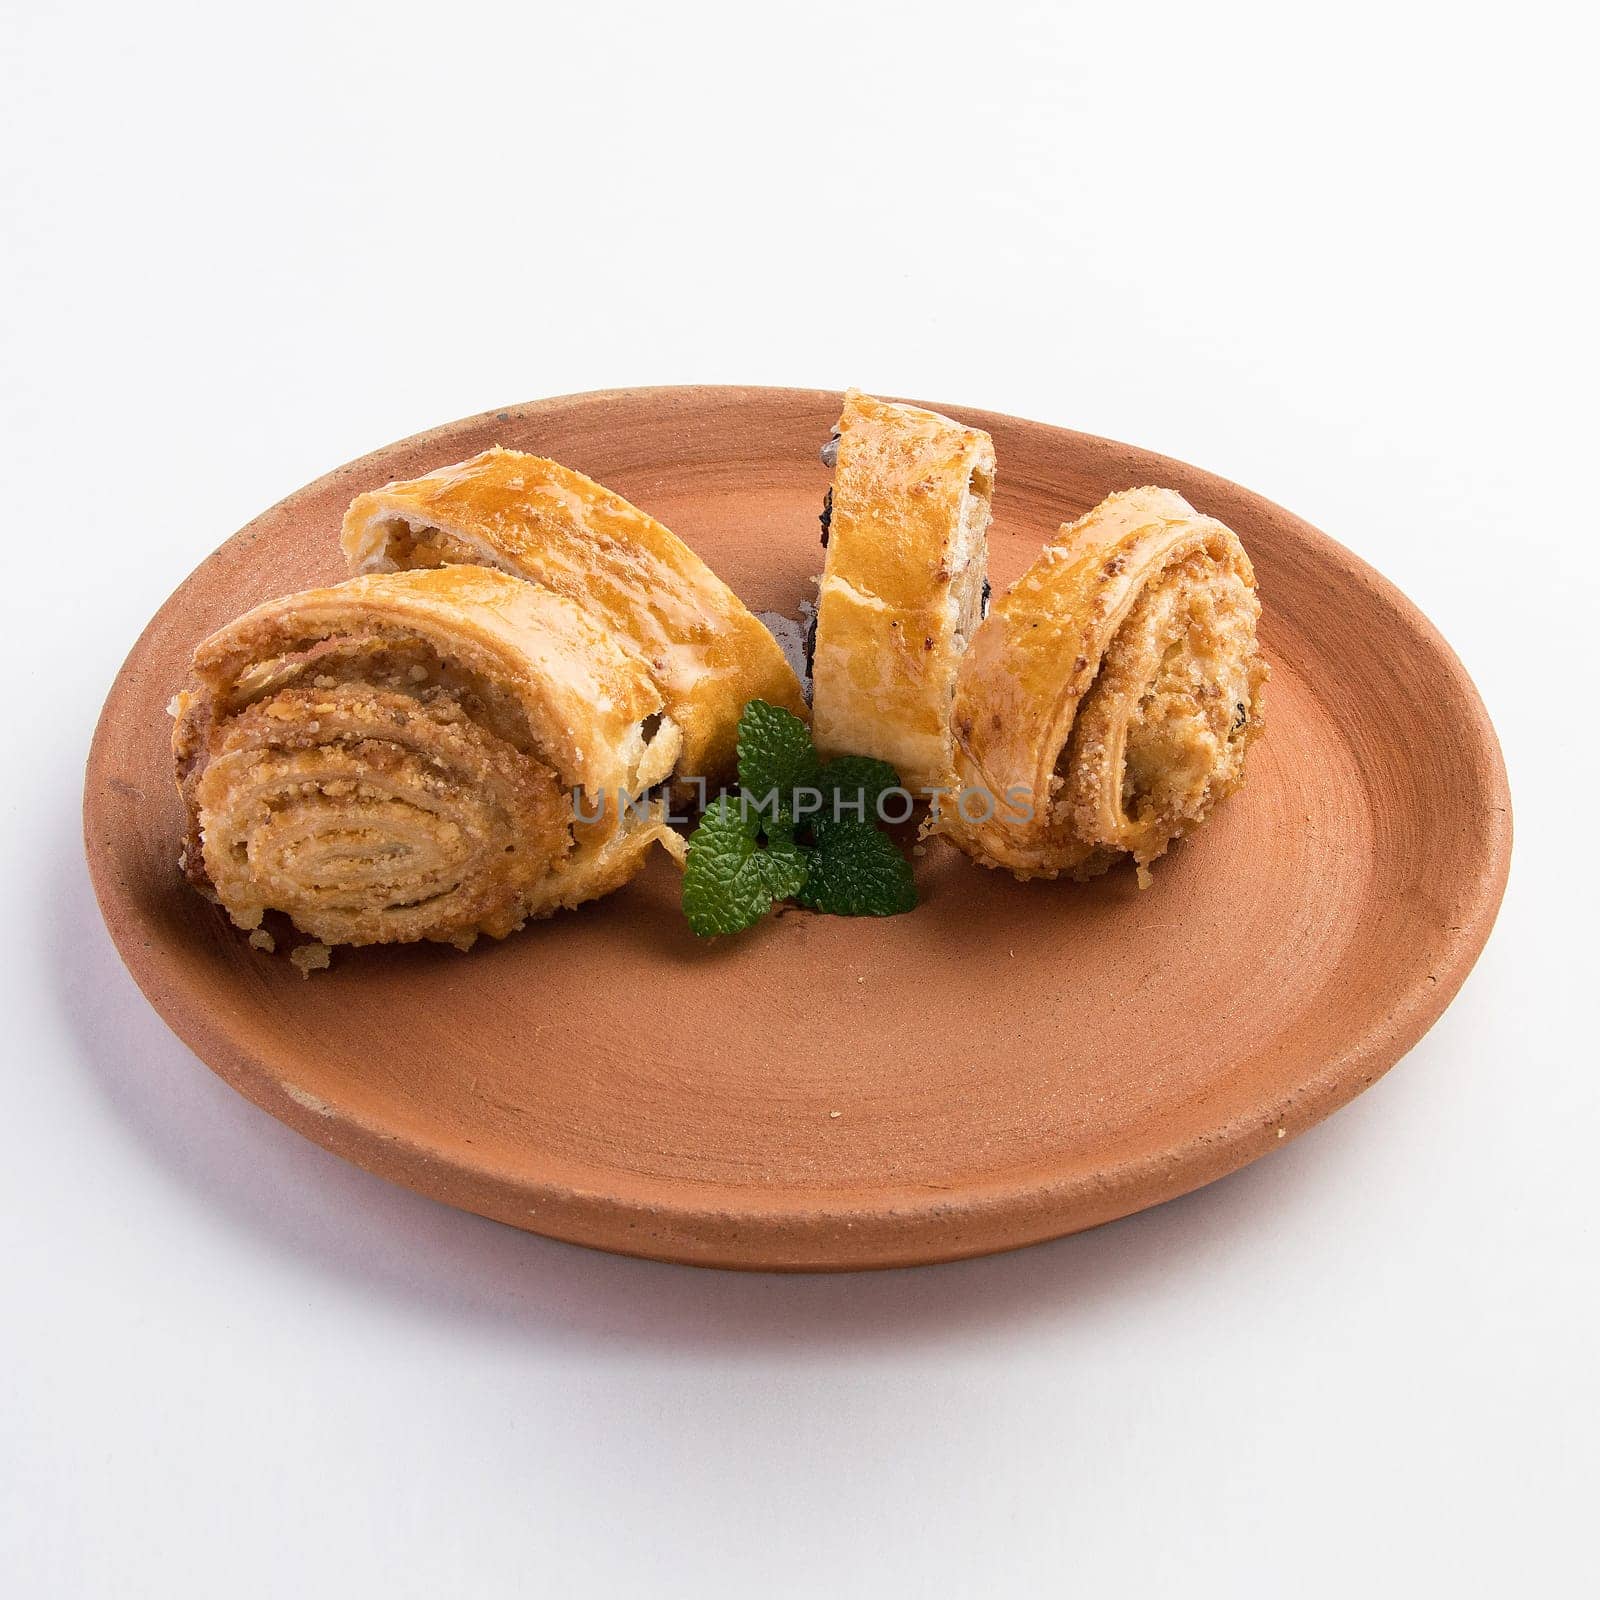 A beautiful shot of tasty sweet rolls with walnuts, raisins and sugar by A_Karim